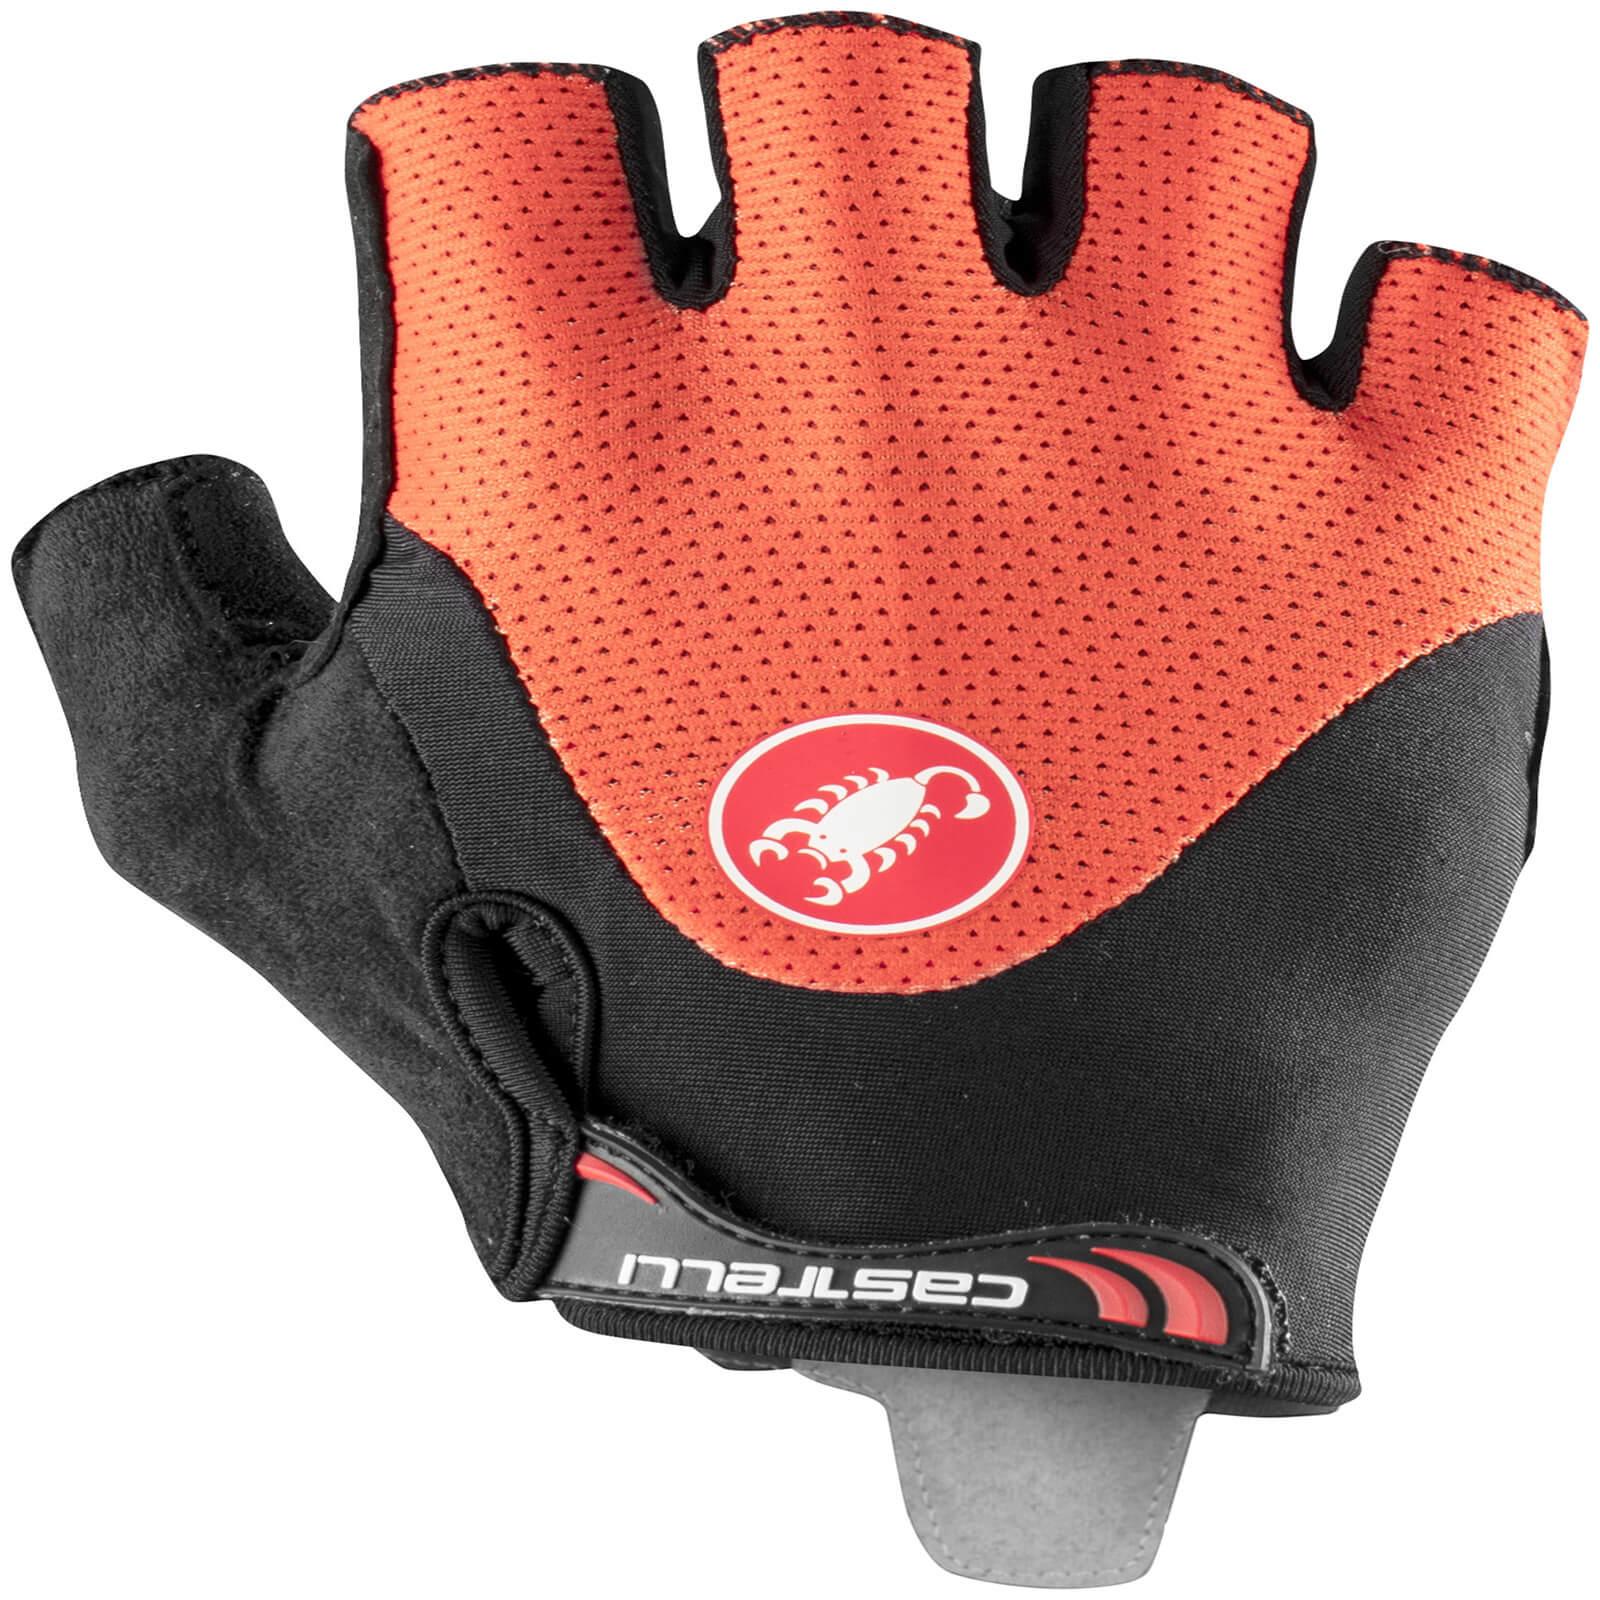 Castelli Arenberg Gel 2 Gloves - L - Fiery Red/Black